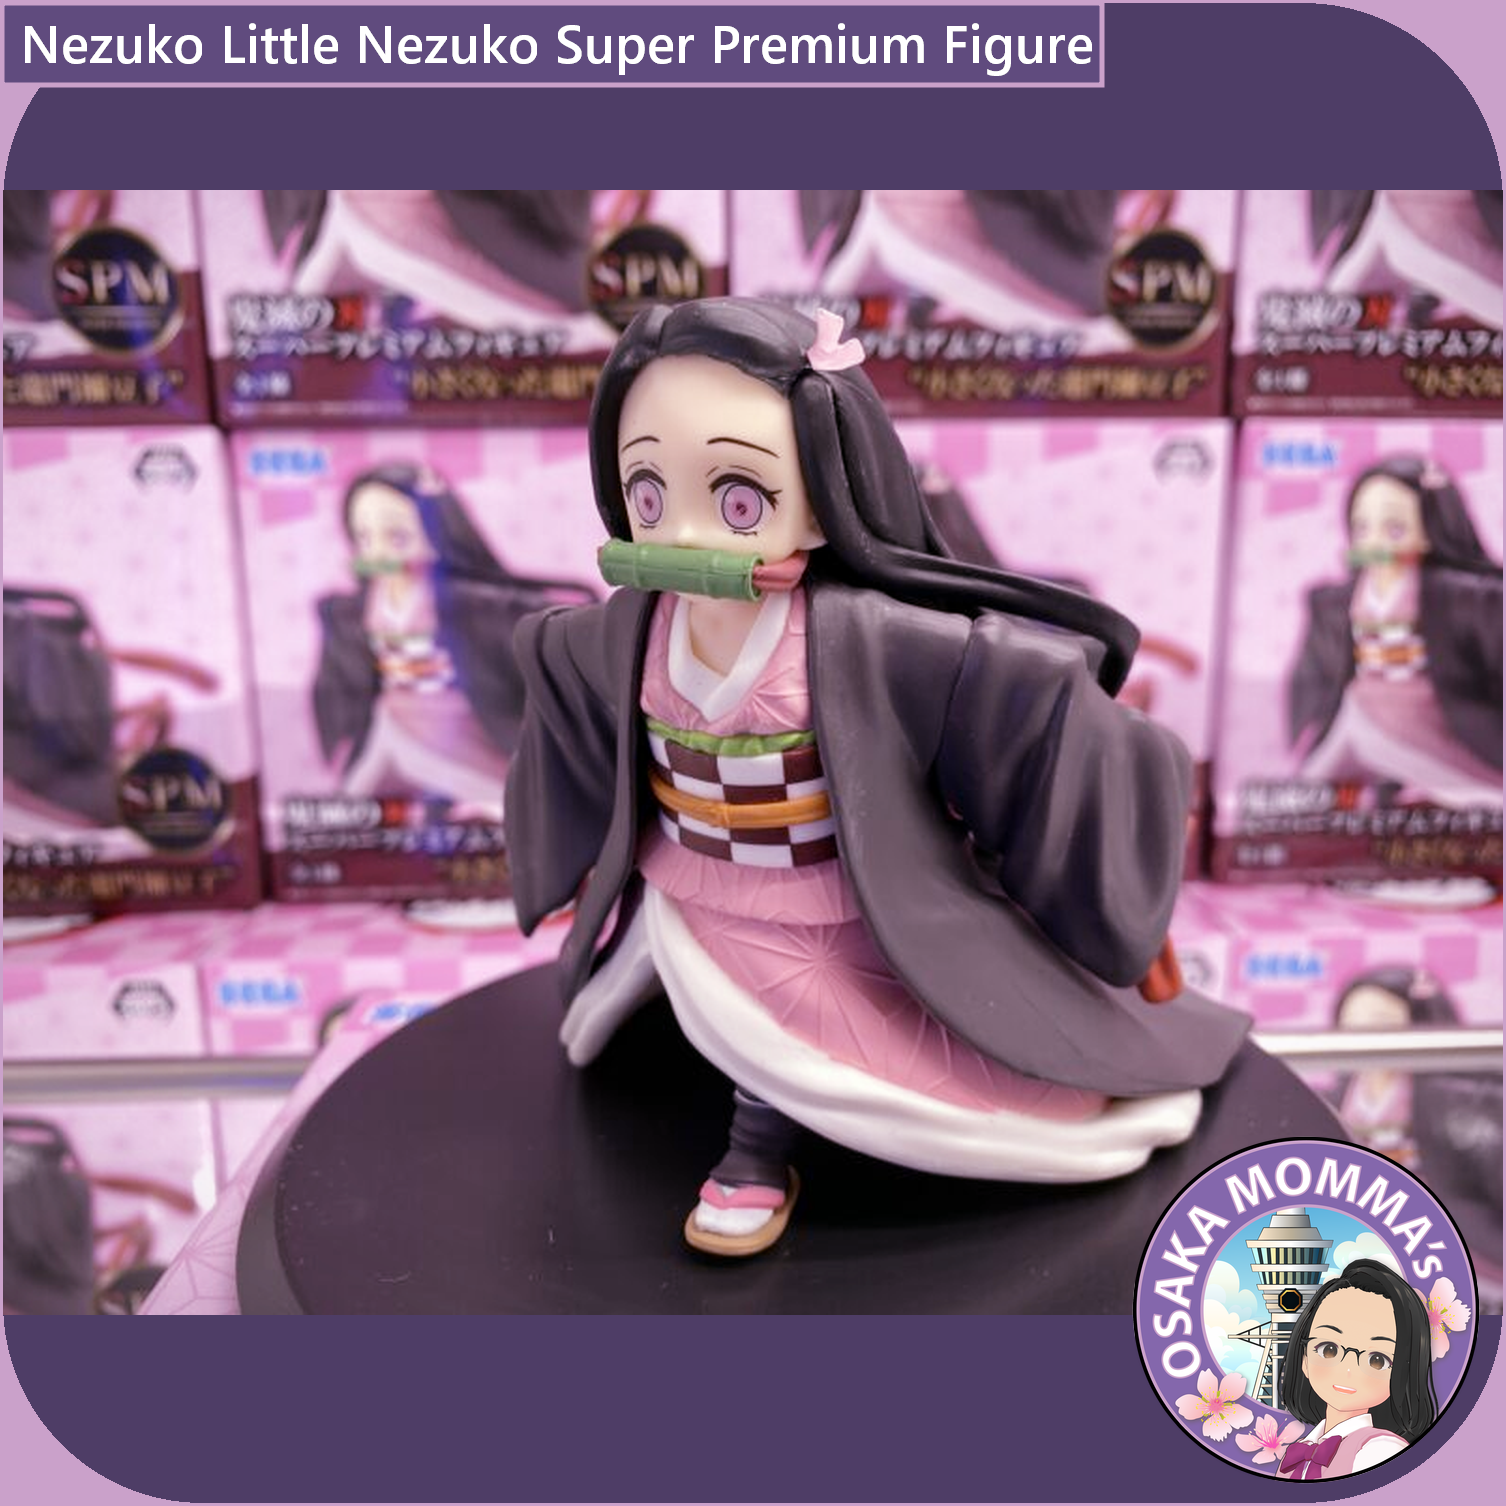 Demon Slayer Kimetsu no Yaiba SPM Super Premium Figure Nezuko Kamado SEGA